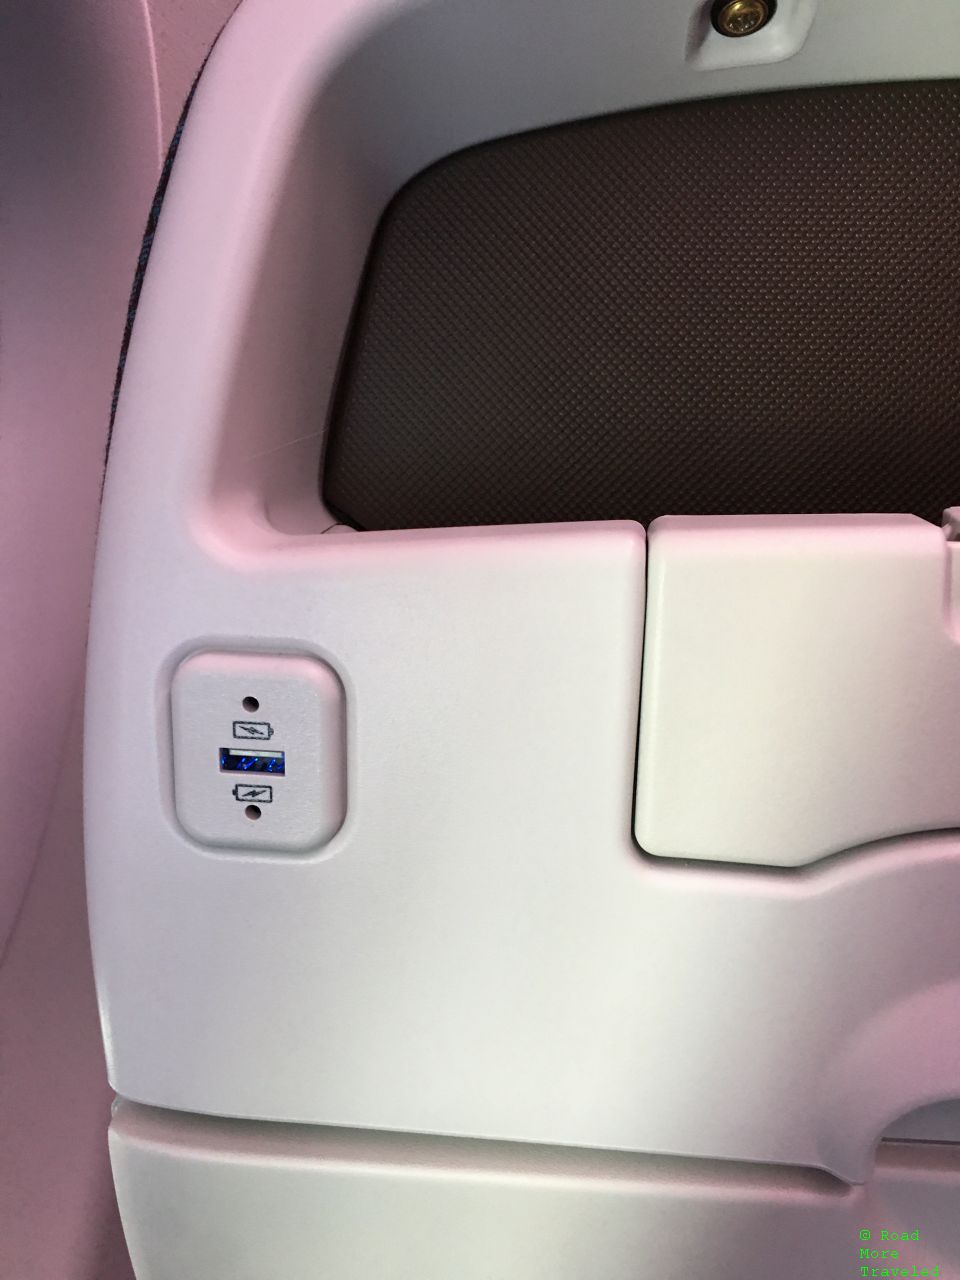 Hawaiian Airlines A321neo Extra Comfort - USB port